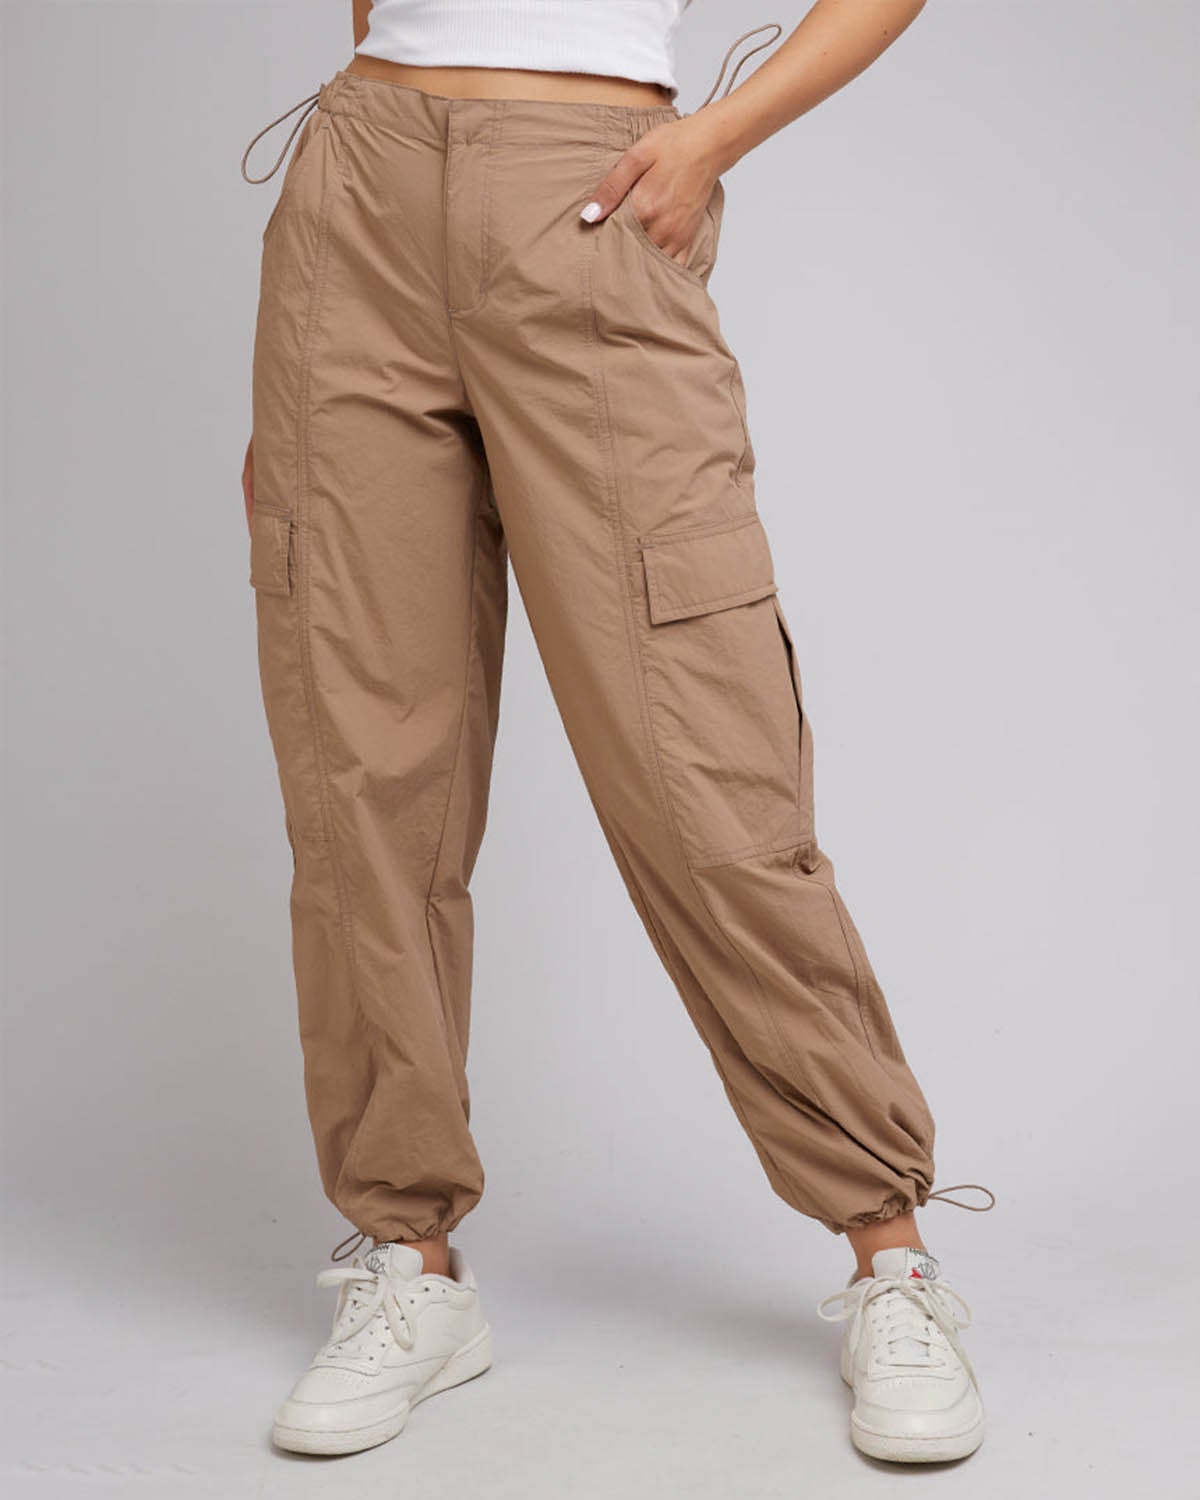 90s khaki pants by No Boundaries. Khaki tan fabric,... - Depop